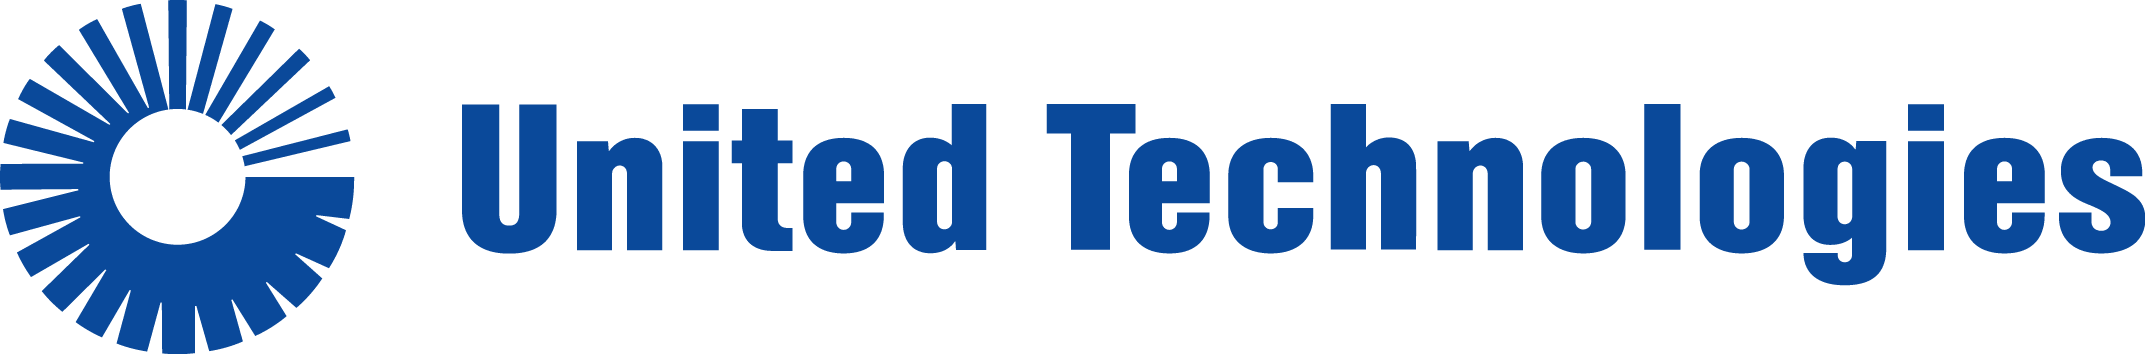 United Technologies Logo PNG Qualité HD